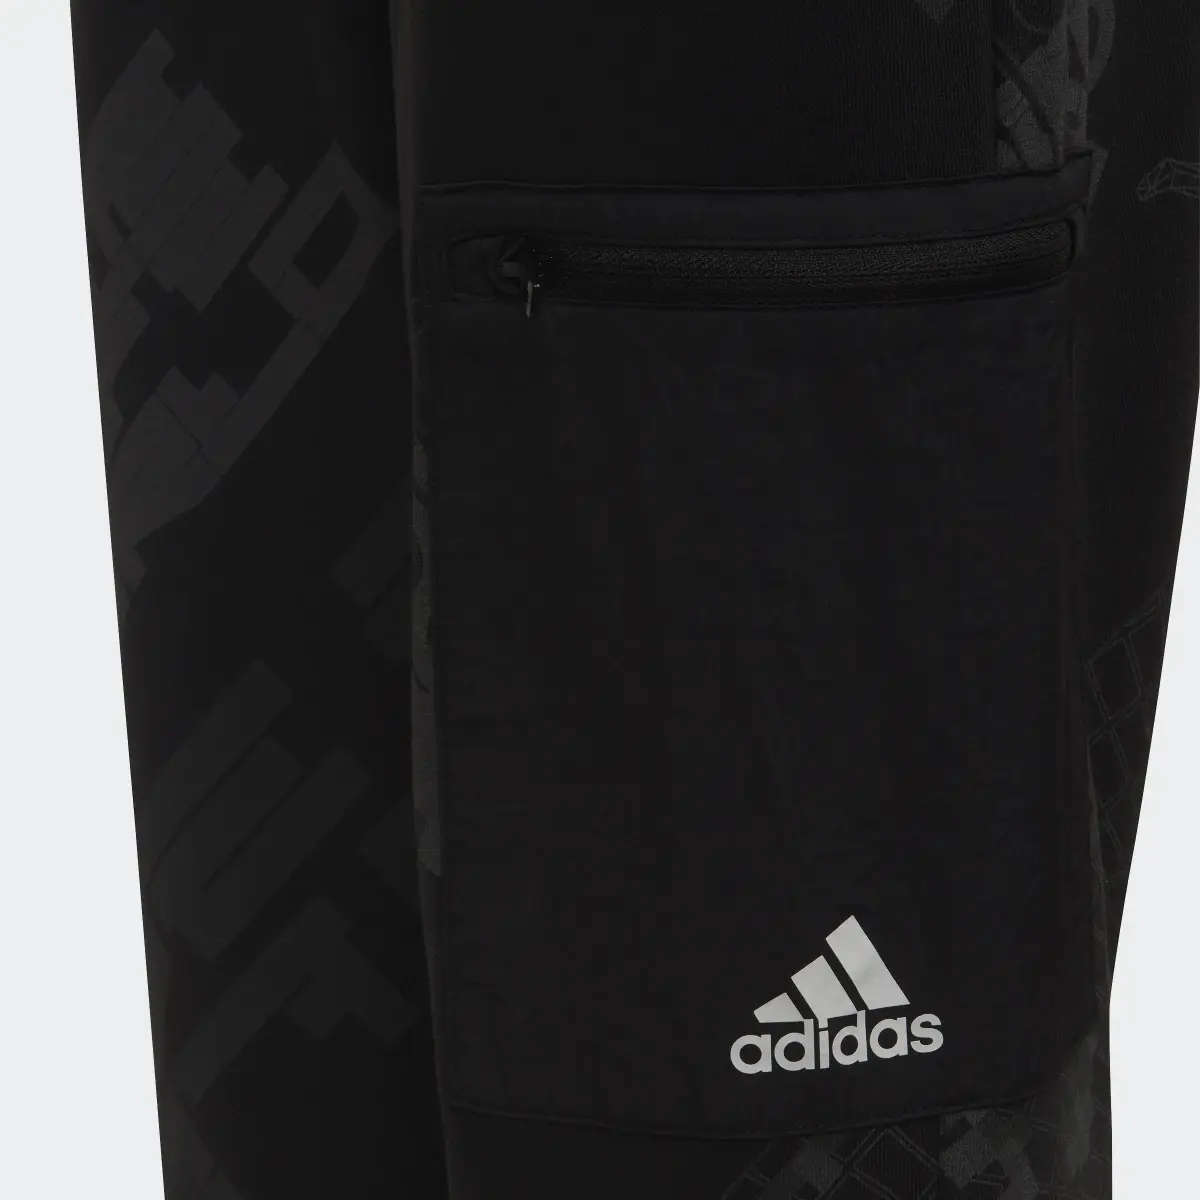 Adidas ARKD3 Pocket Joggers. 3